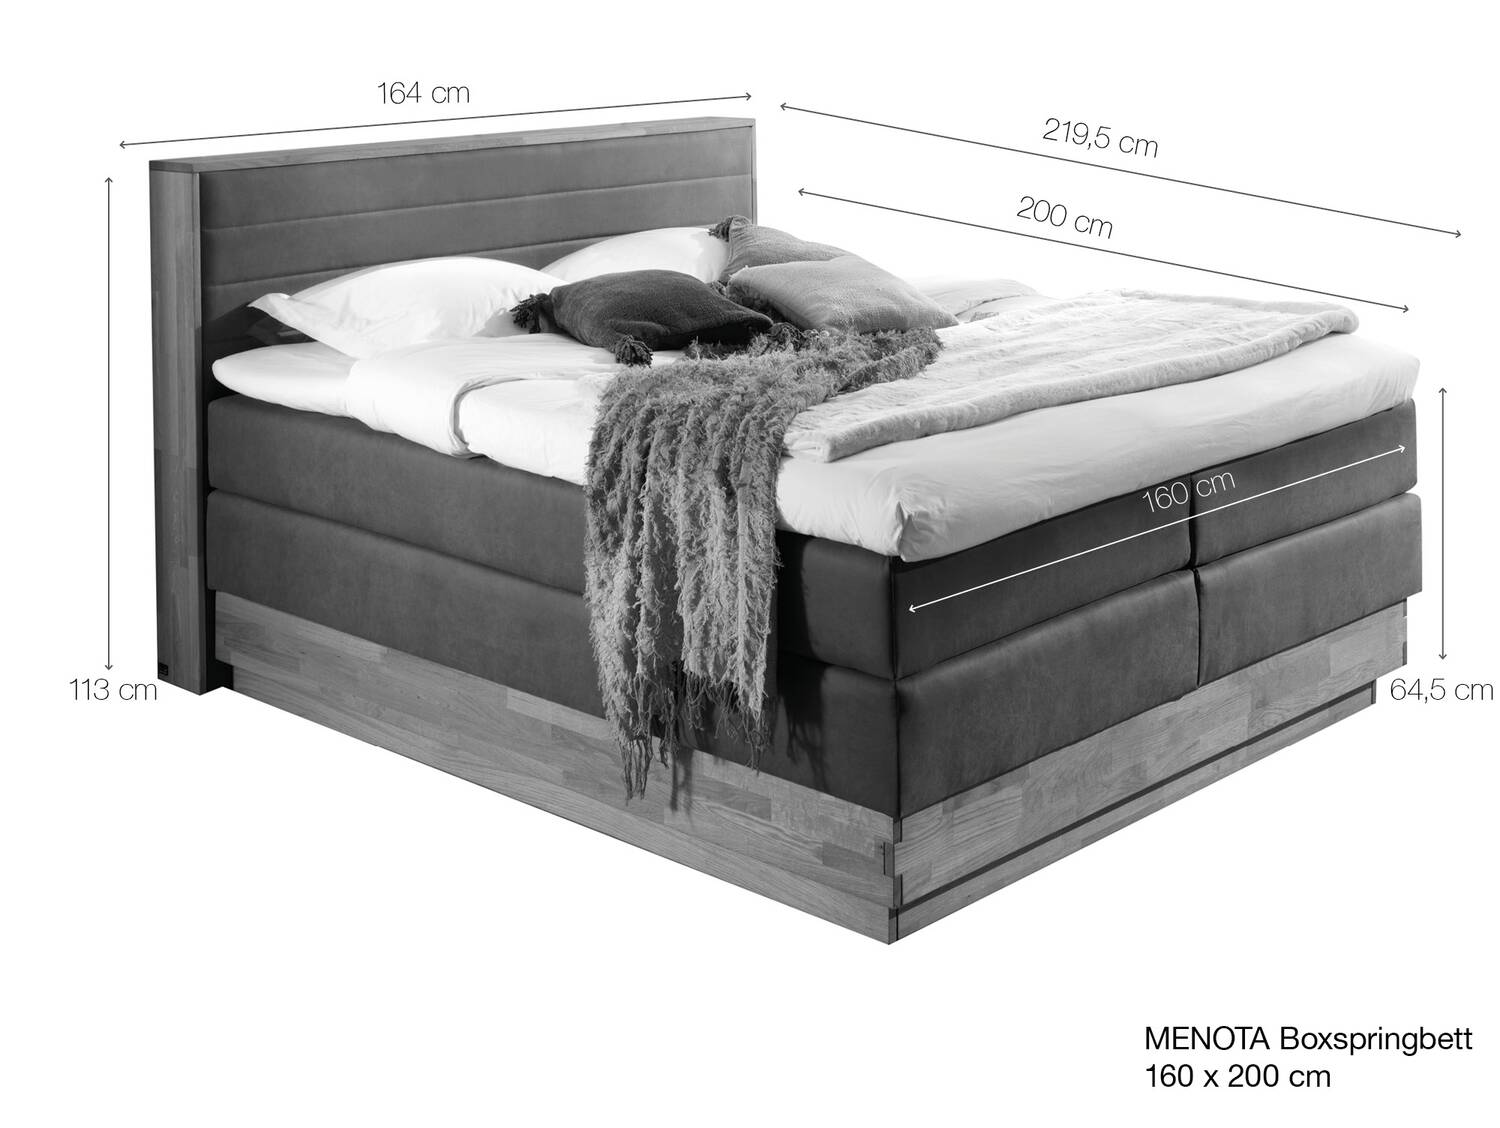 MENOTA Boxspringbett mit Bettkasten, massivem Holzrahmen und Bezug im Vintage Look 160 x 200 cm | braun | Härtegrad 2